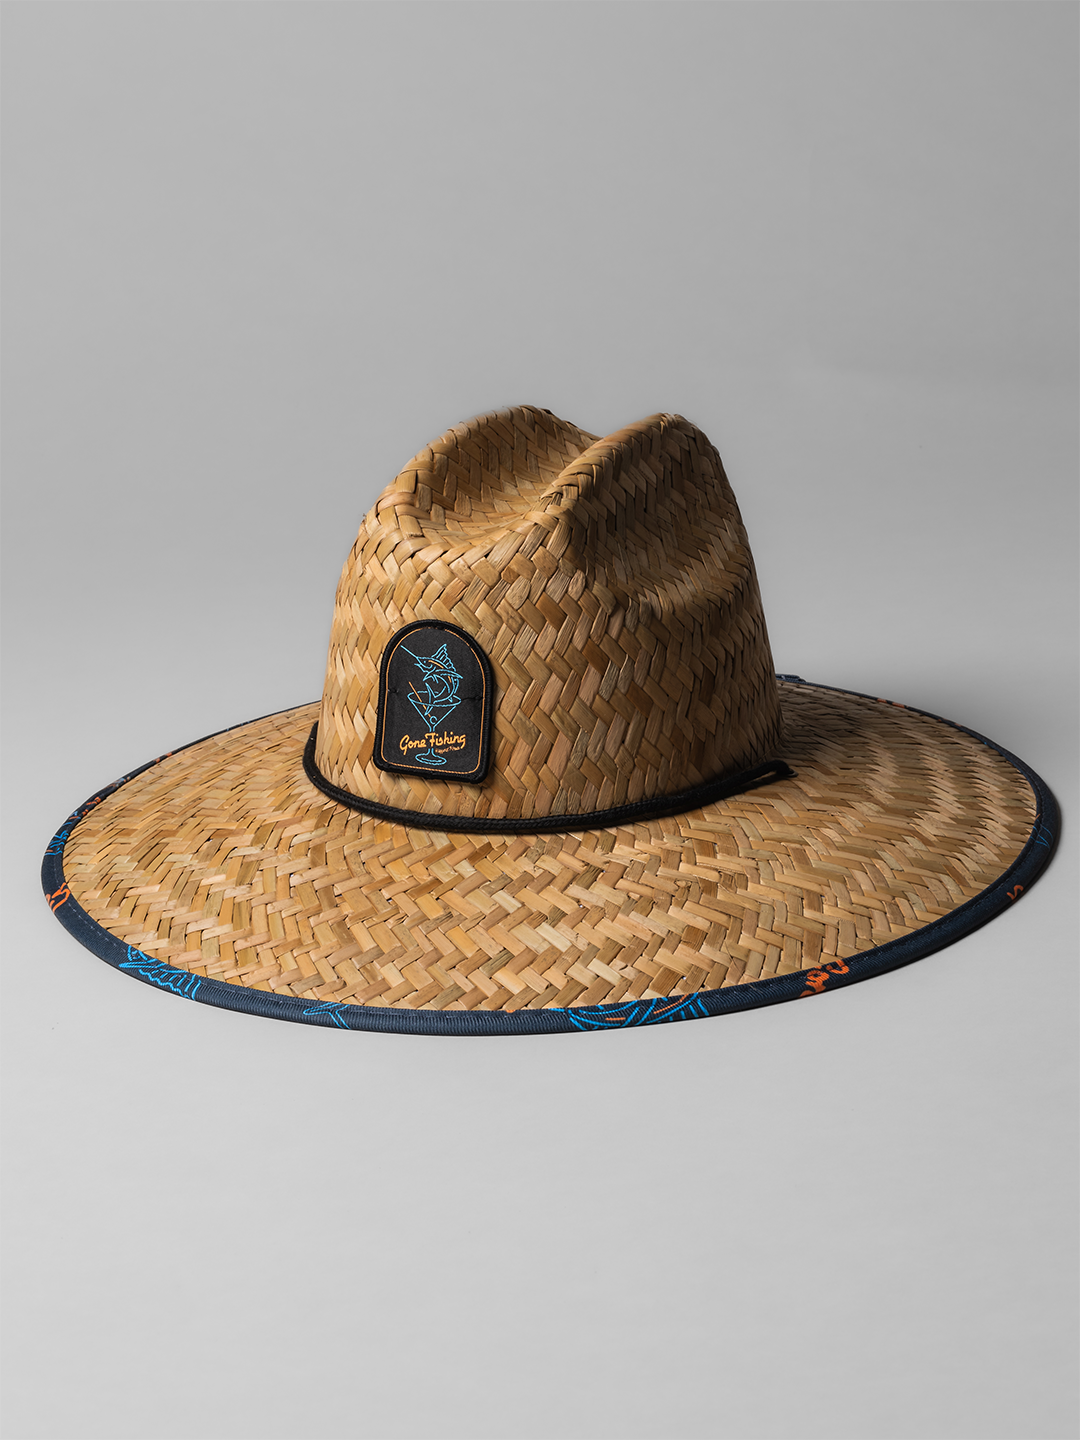 Gone Fishing Straw Hat